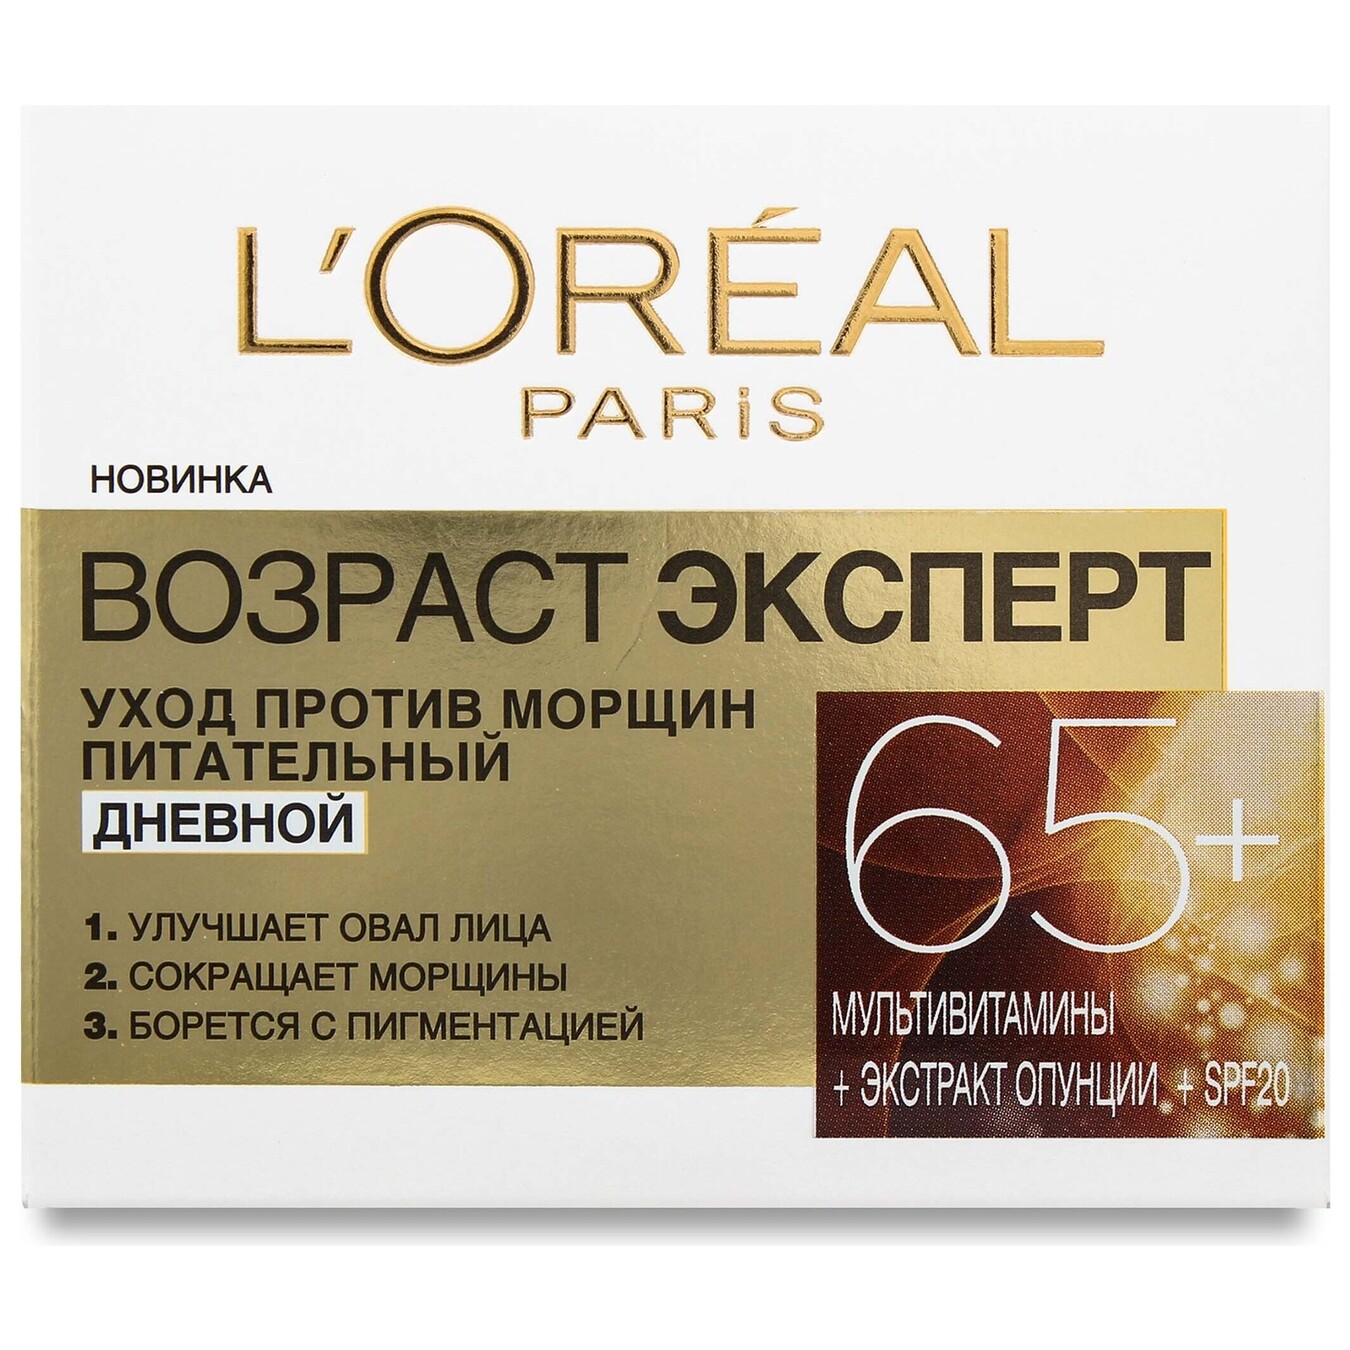 L'Oreal Paris Skin Expert 65+ day anti-wrinkle cream for women's facial skin 50ml